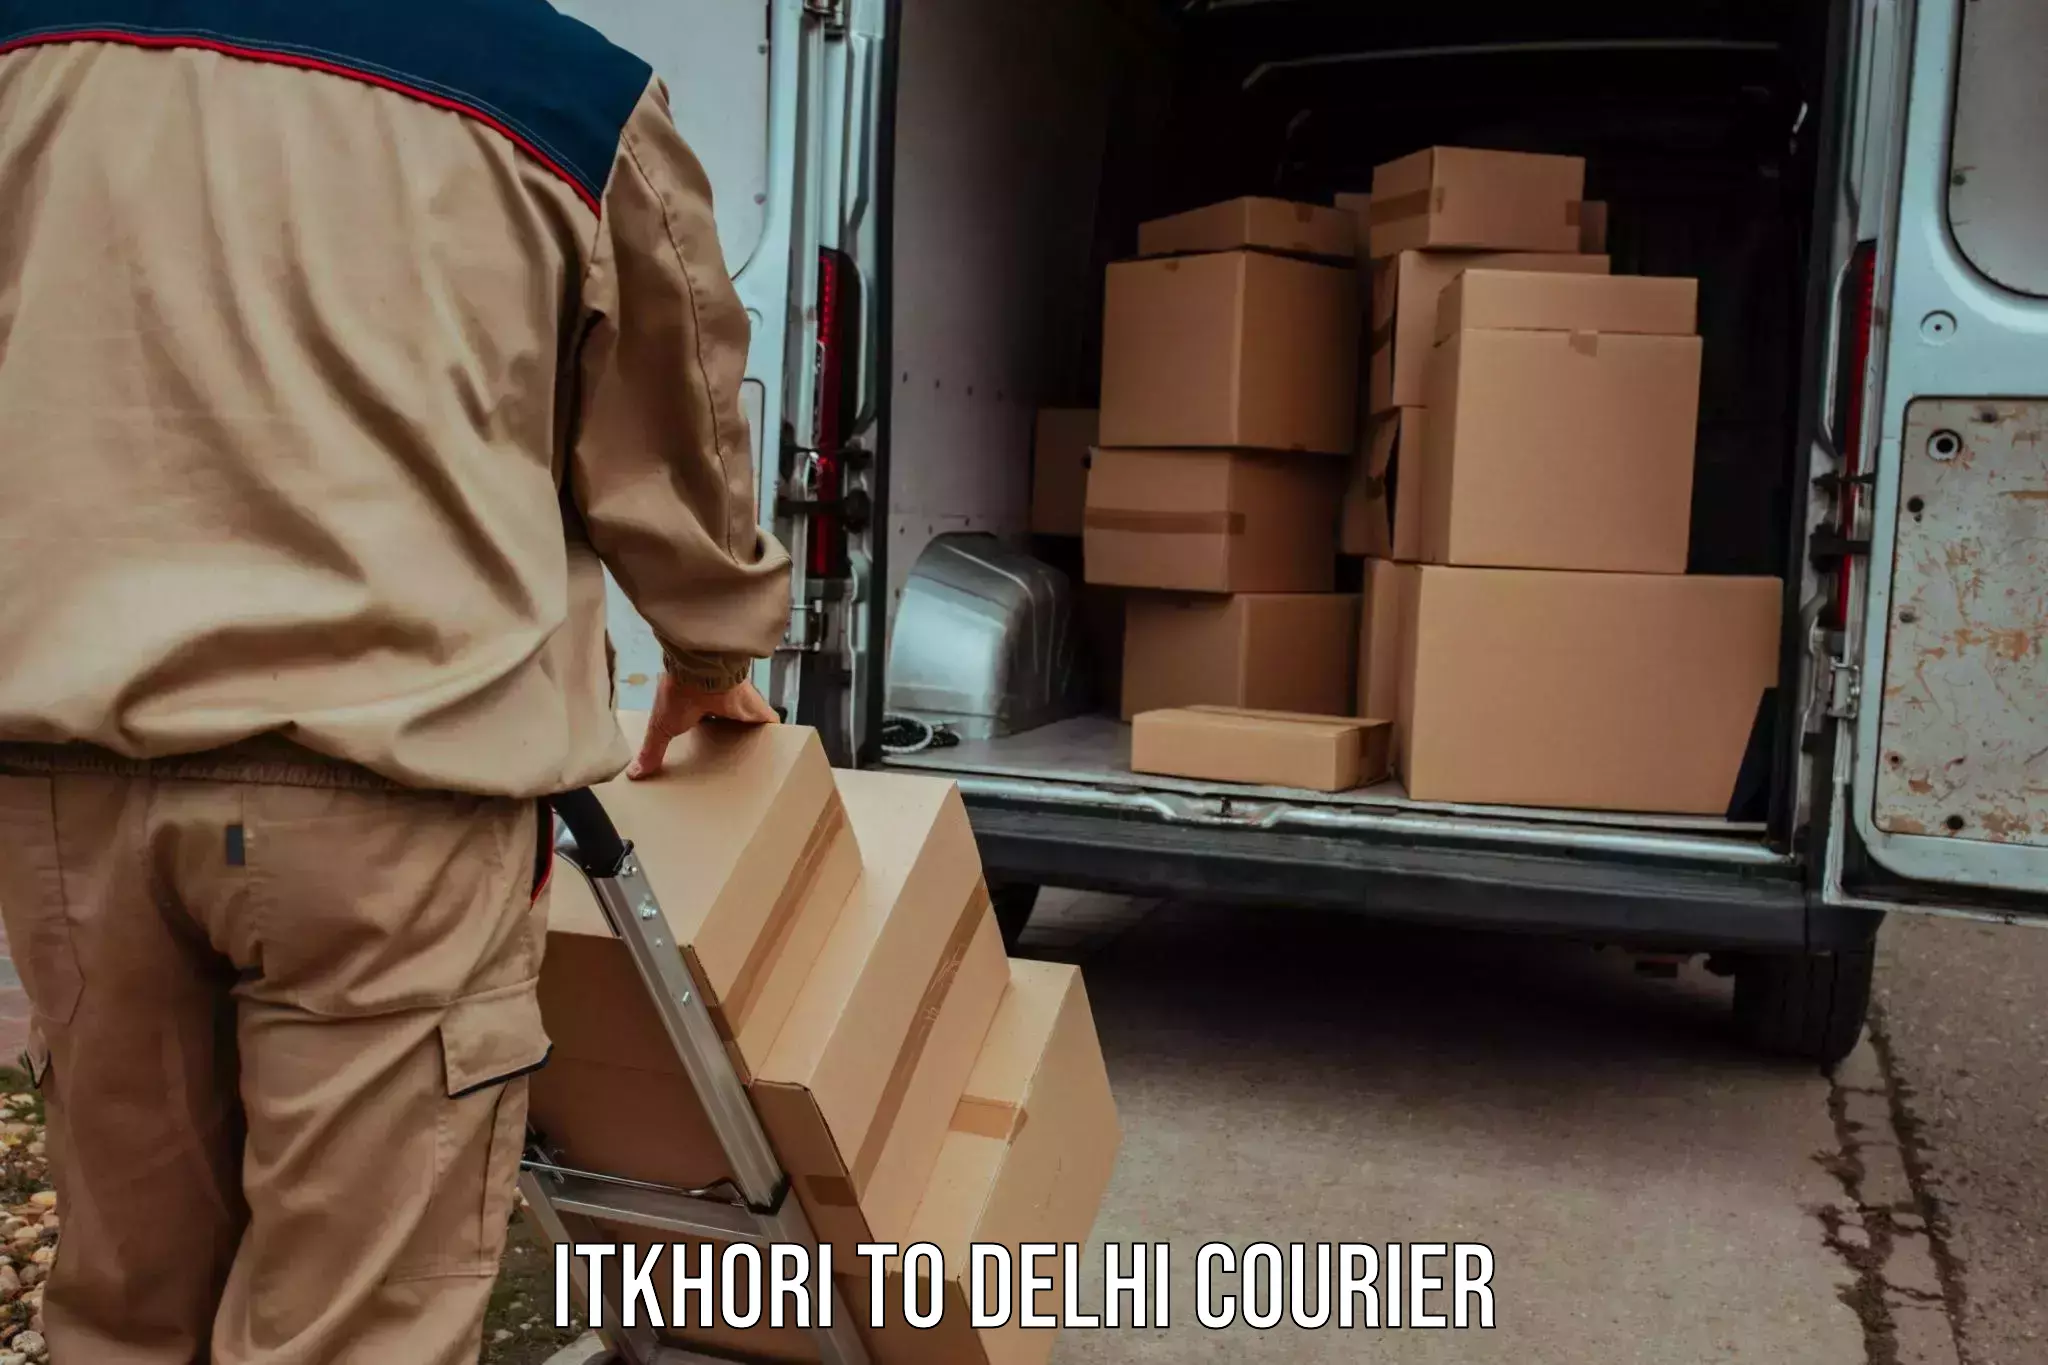 Multi-national courier services Itkhori to Sansad Marg